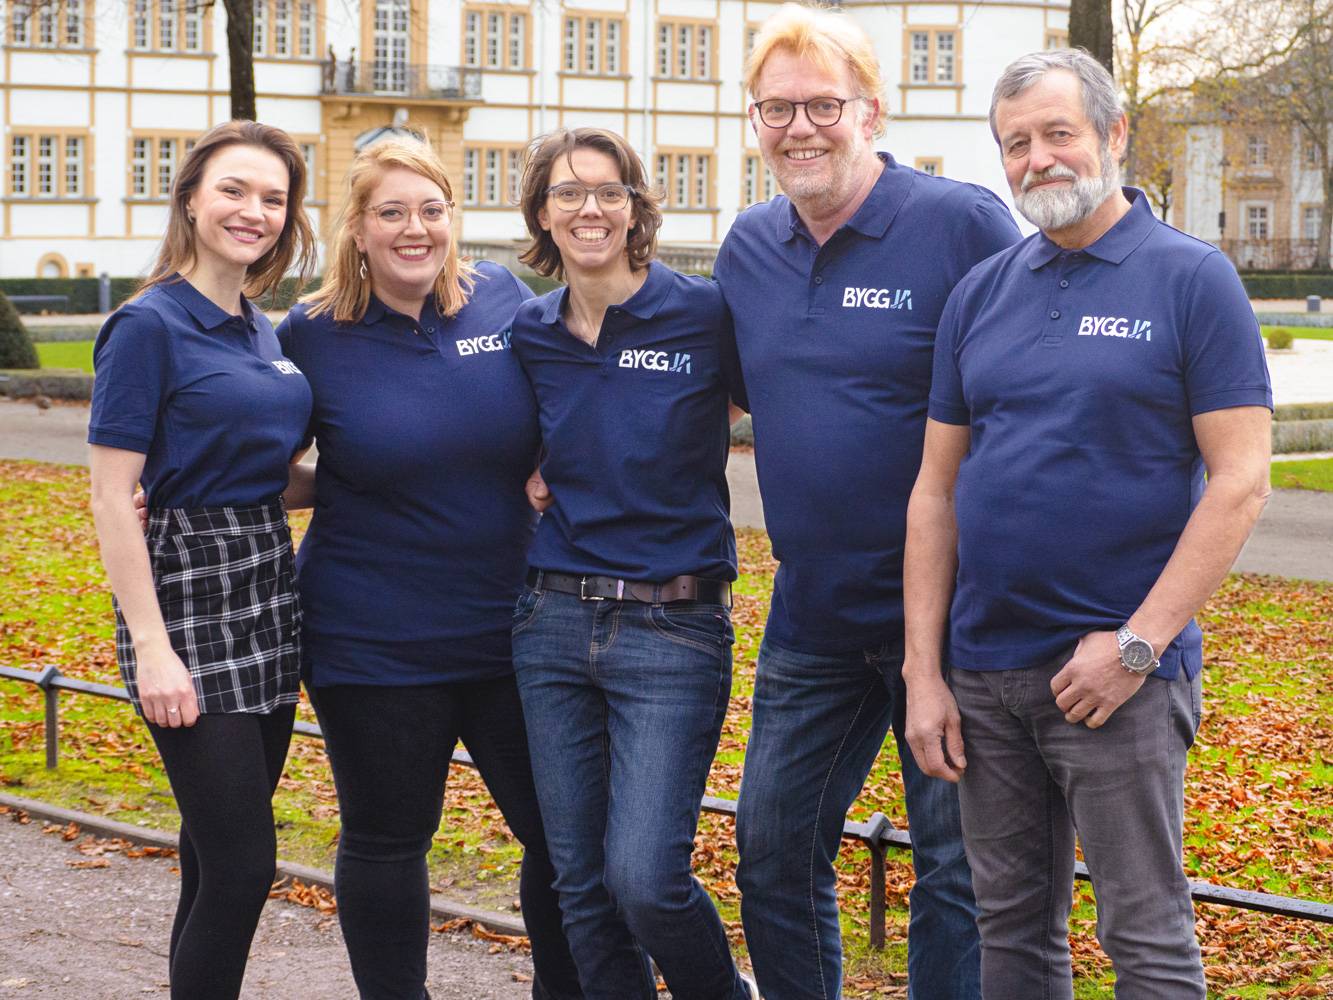 Team der Byggja Consulting vor einem Paderborner Denkmal